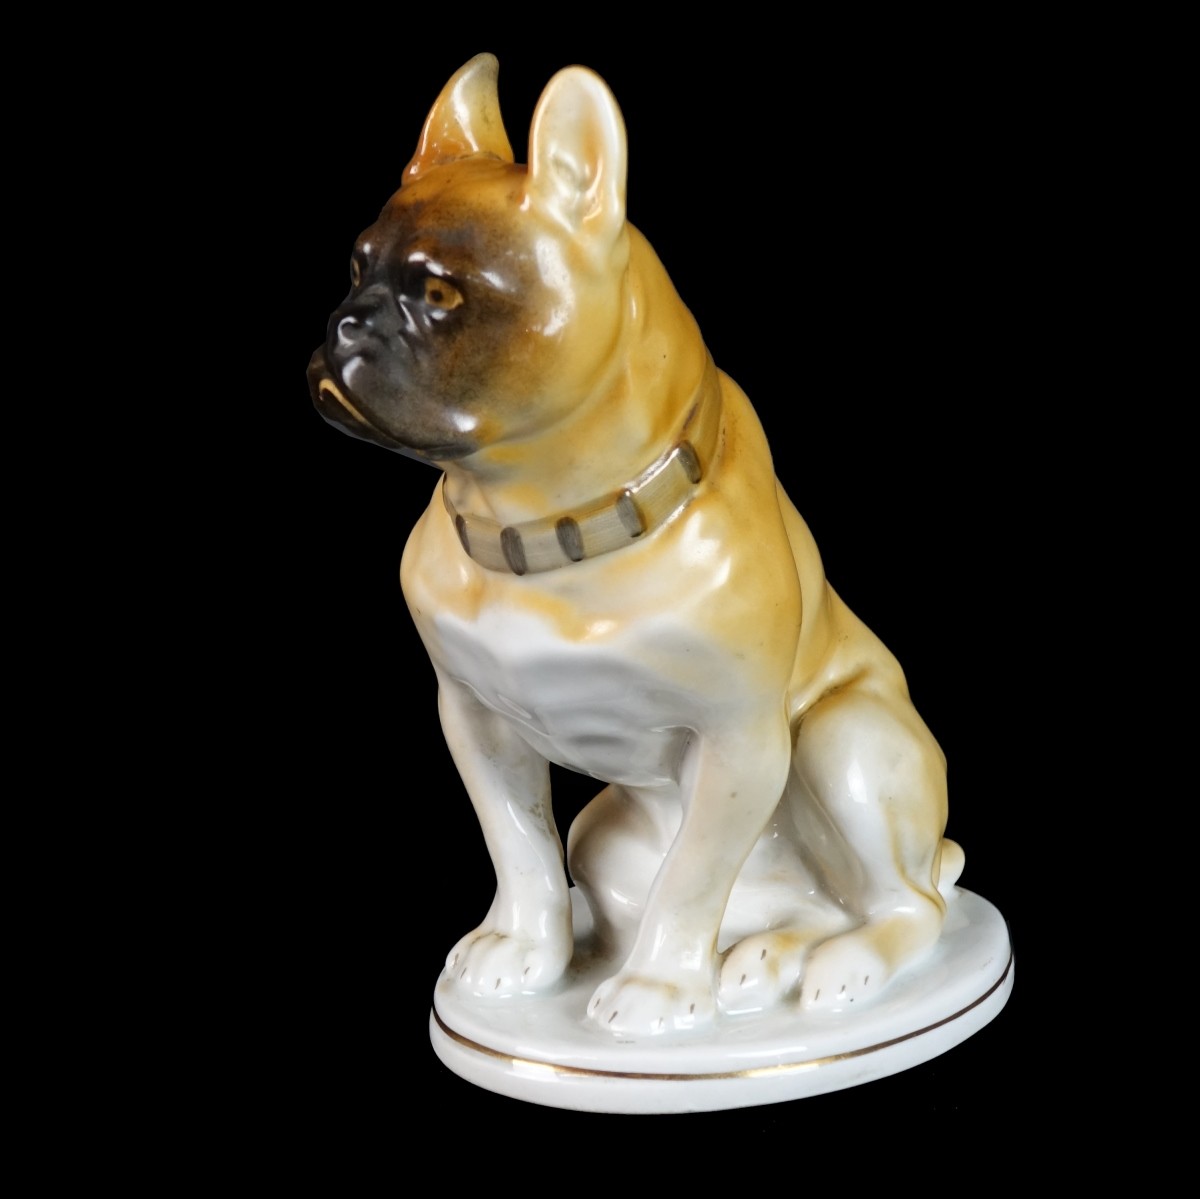 Imperial Porcelain Factory Dog Figurine